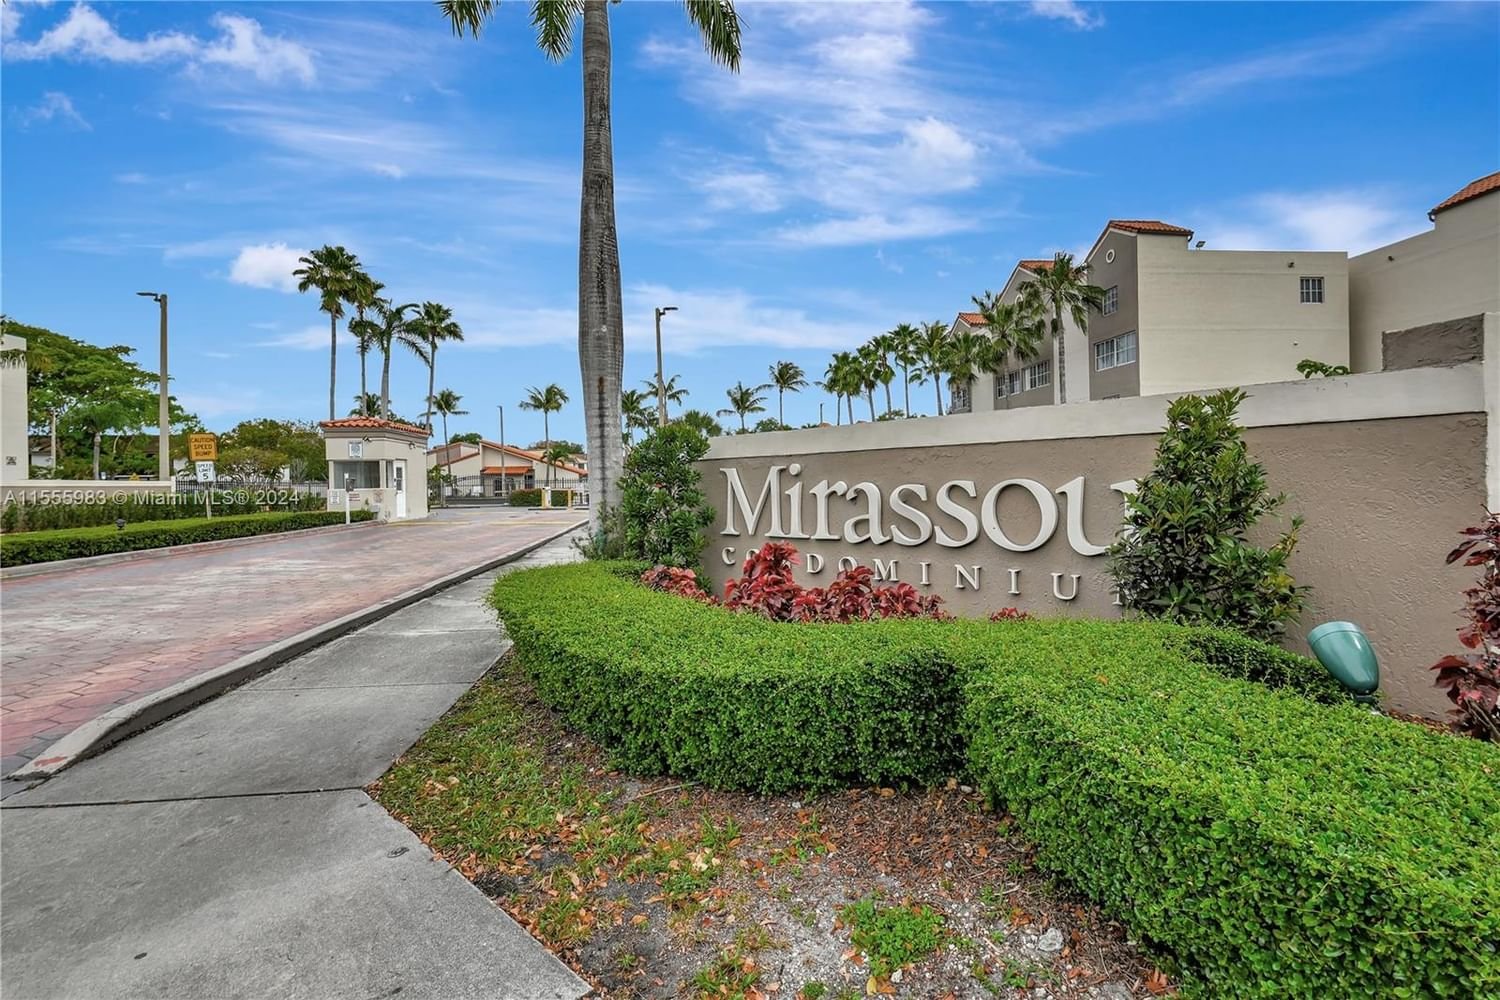 Real estate property located at 6065 186th St #103, Miami-Dade County, MIRASSOU CONDO, Hialeah, FL